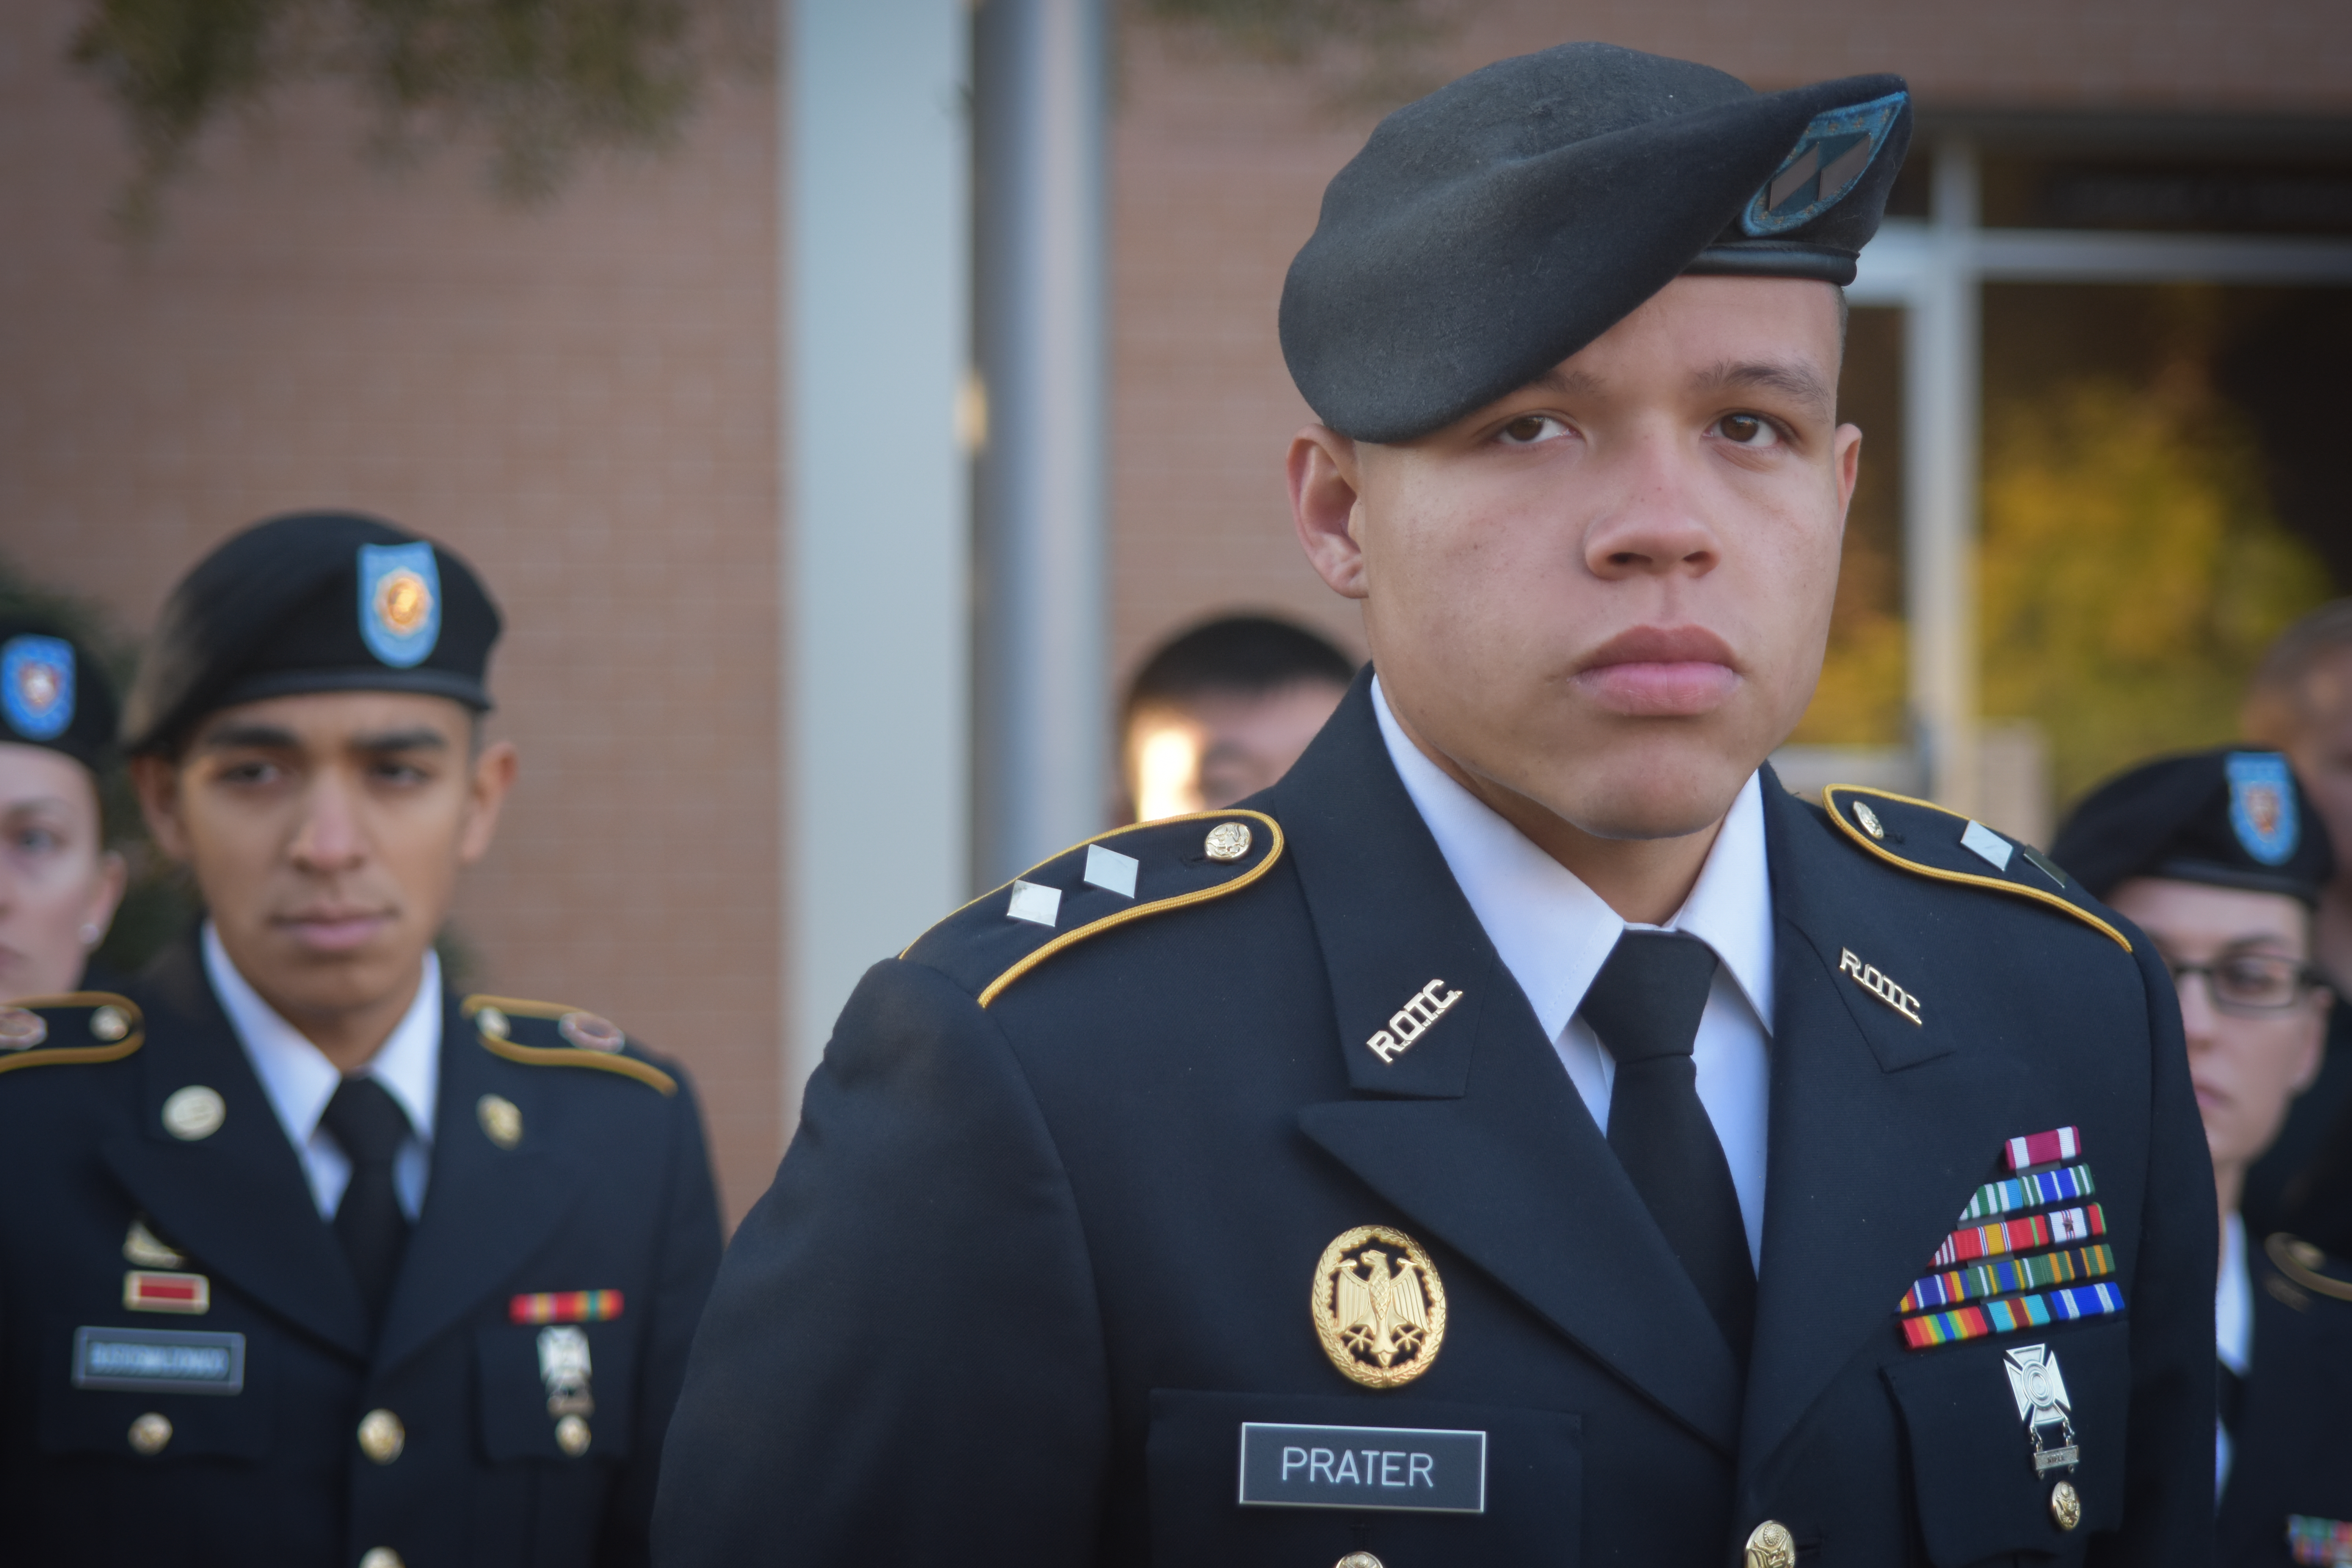 Army ROTC Cadet Gerald Prater